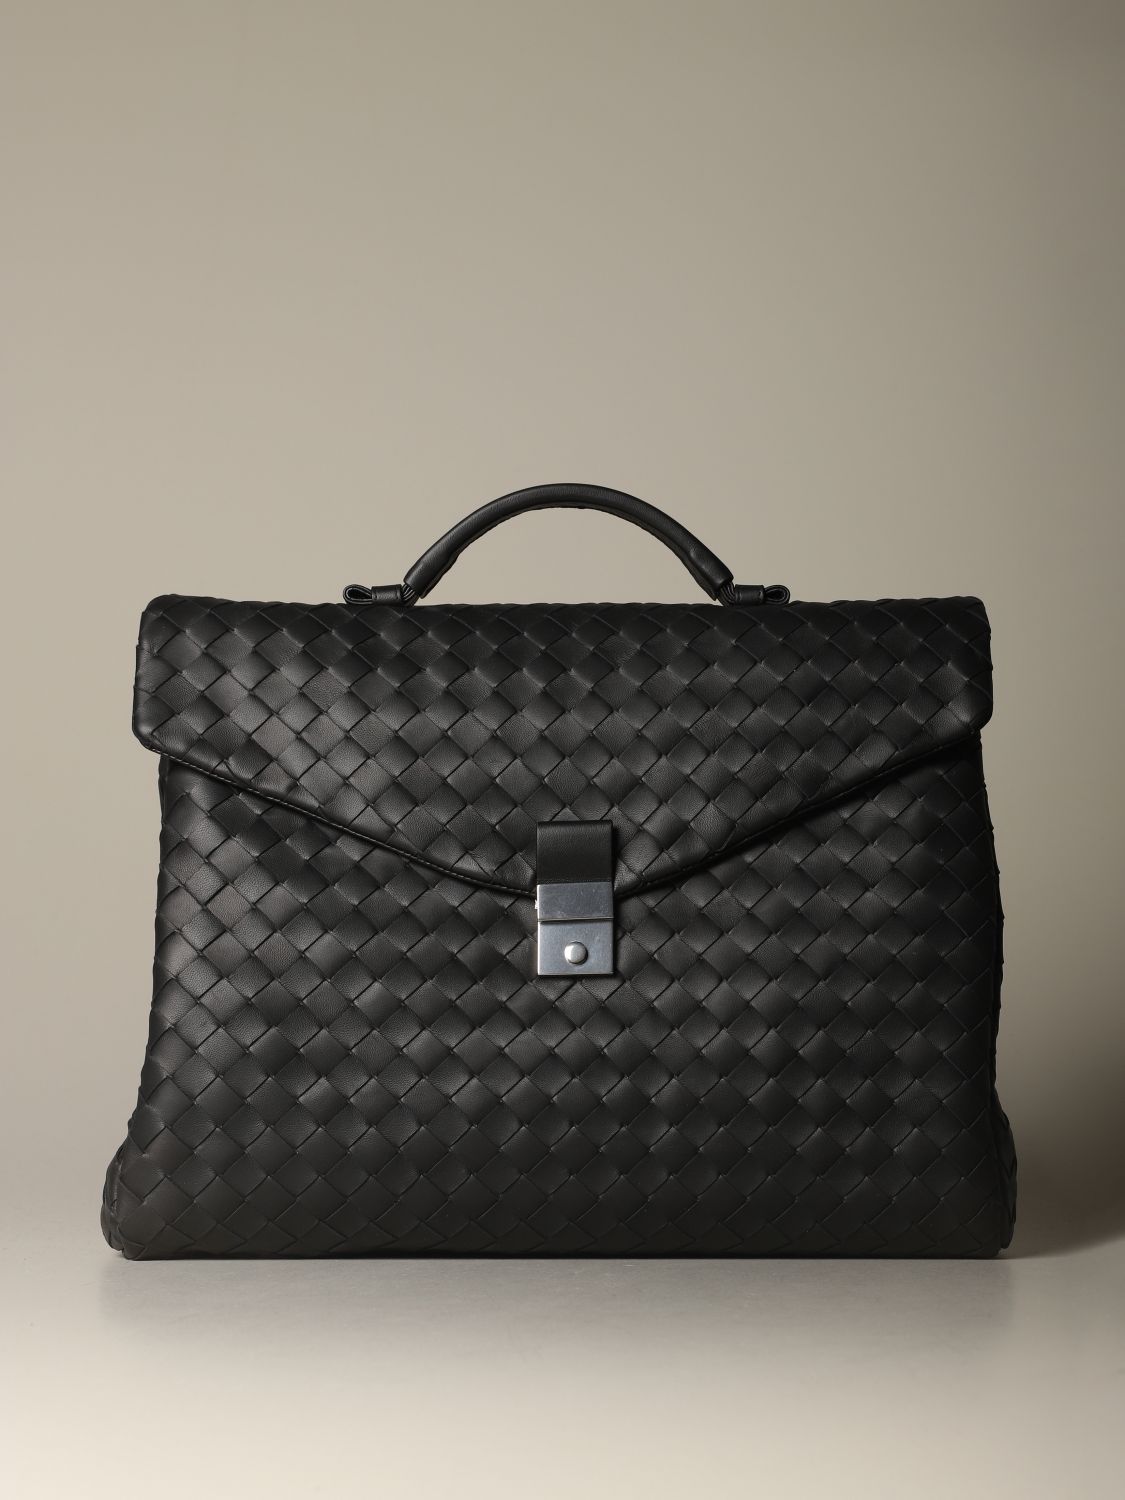 BOTTEGA VENETA: work bag in woven leather - Black | Bottega Veneta 